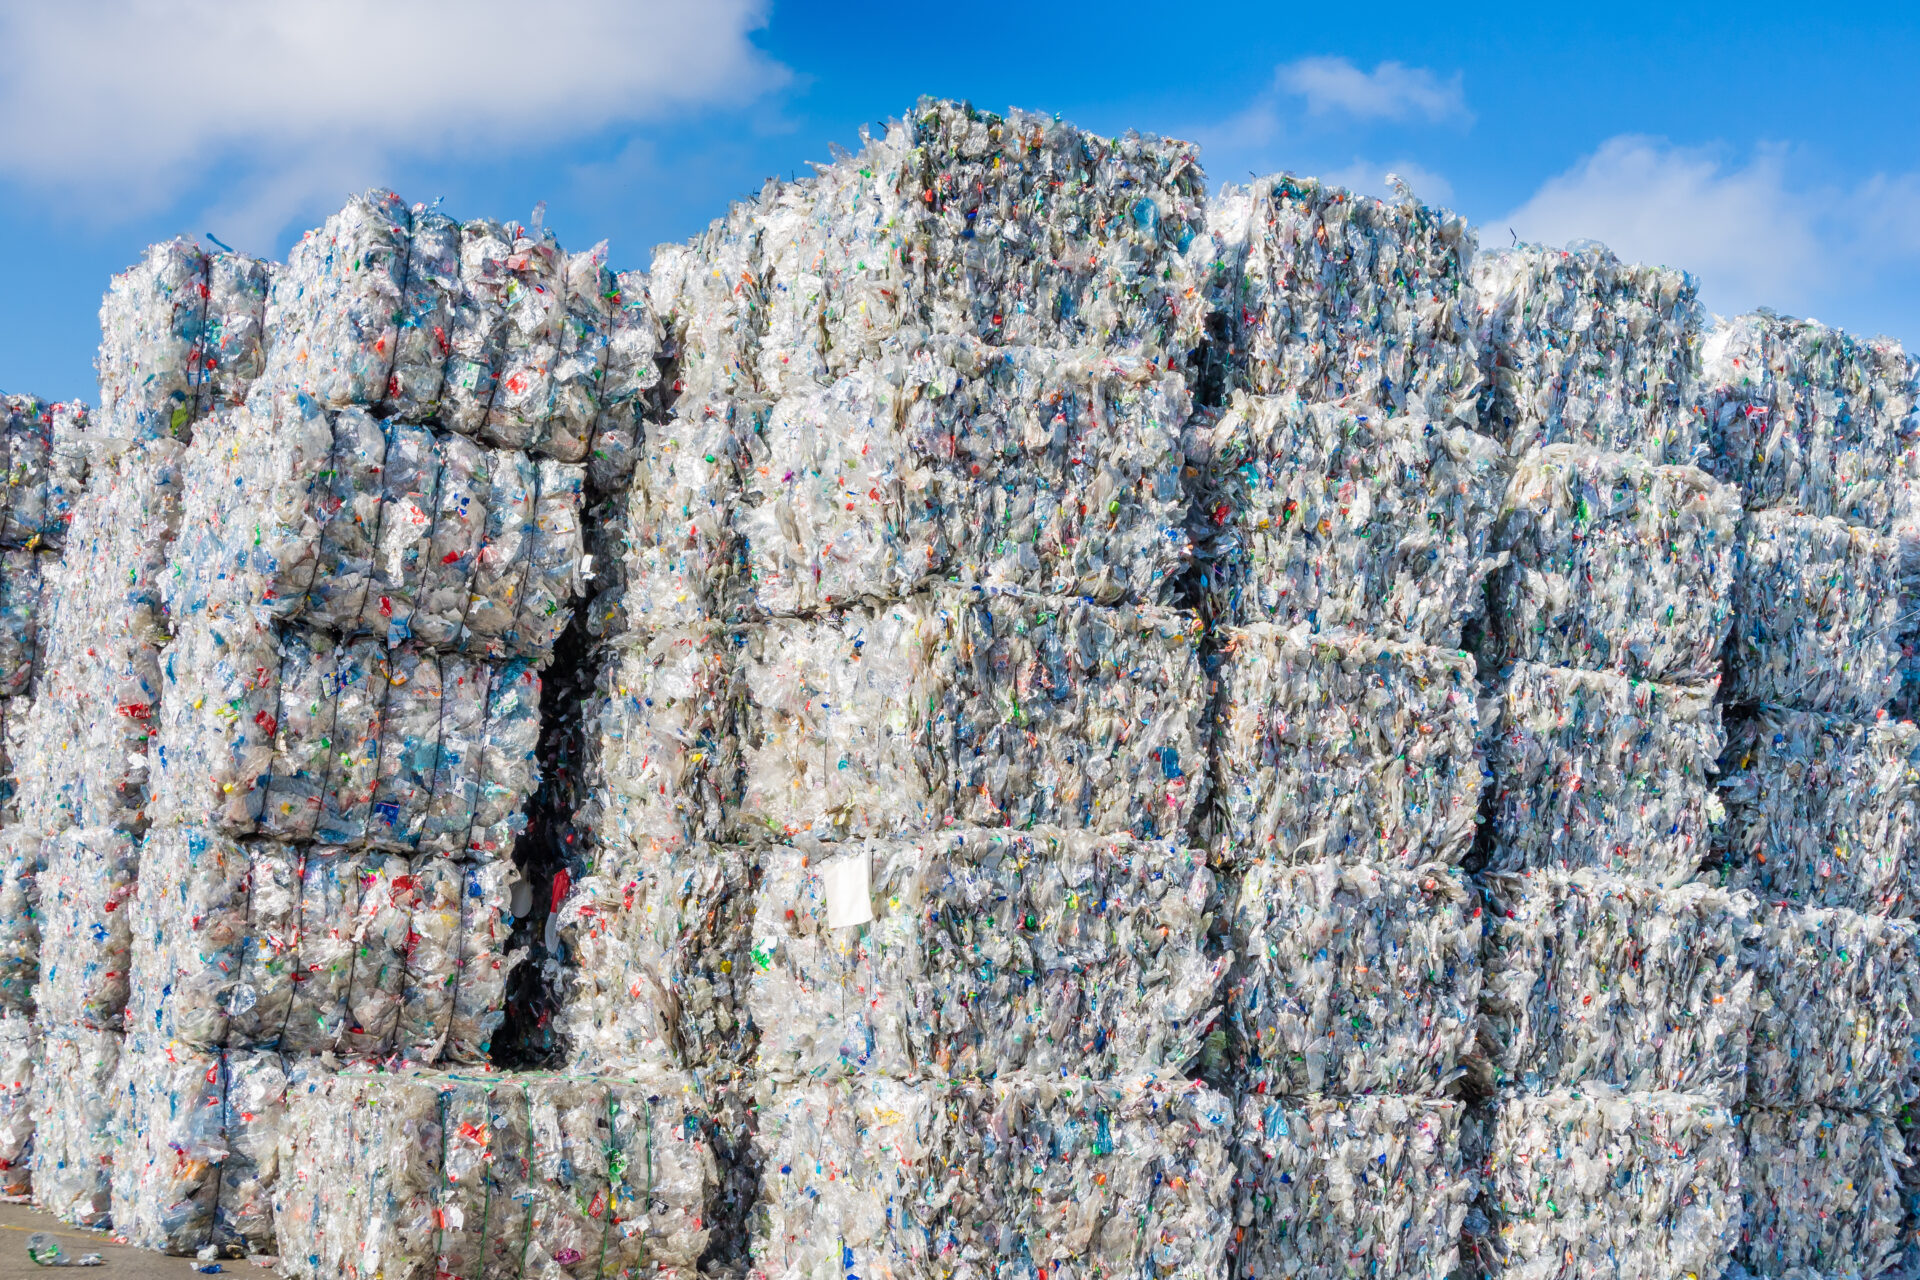 Europe risks falling short of its plastics recycling targets